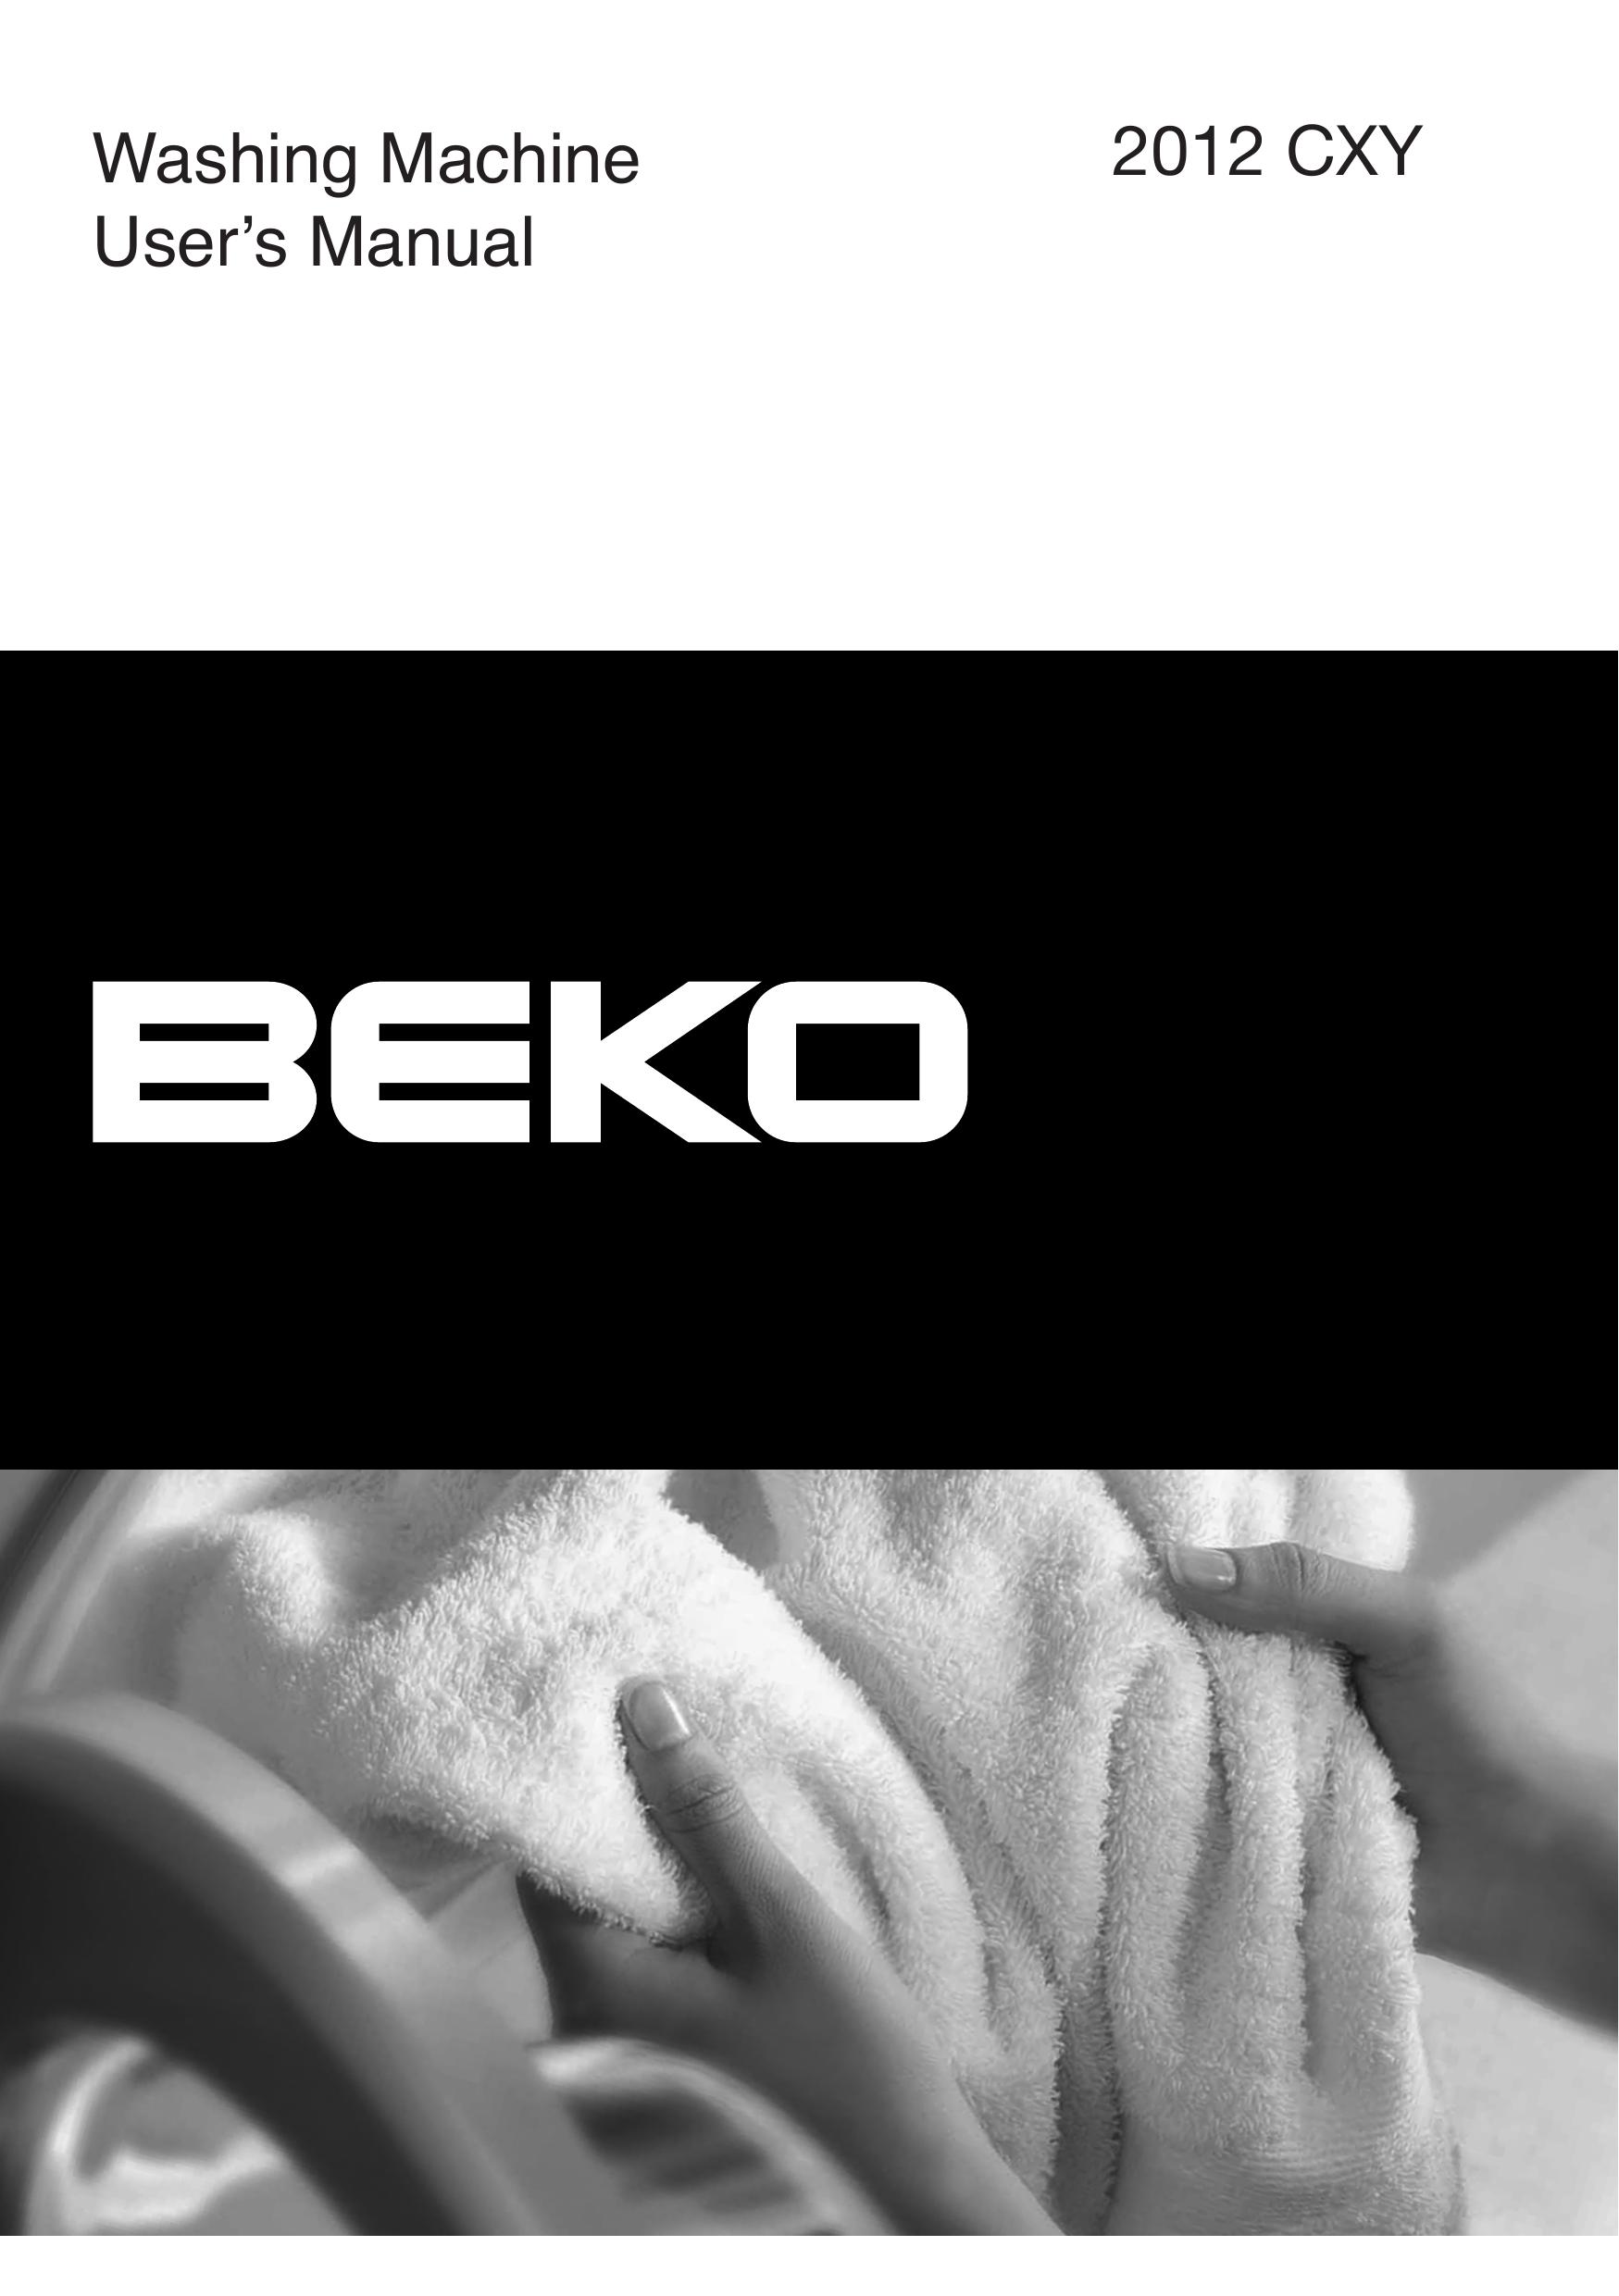 Beko 2012 CXY Washer/Dryer User Manual